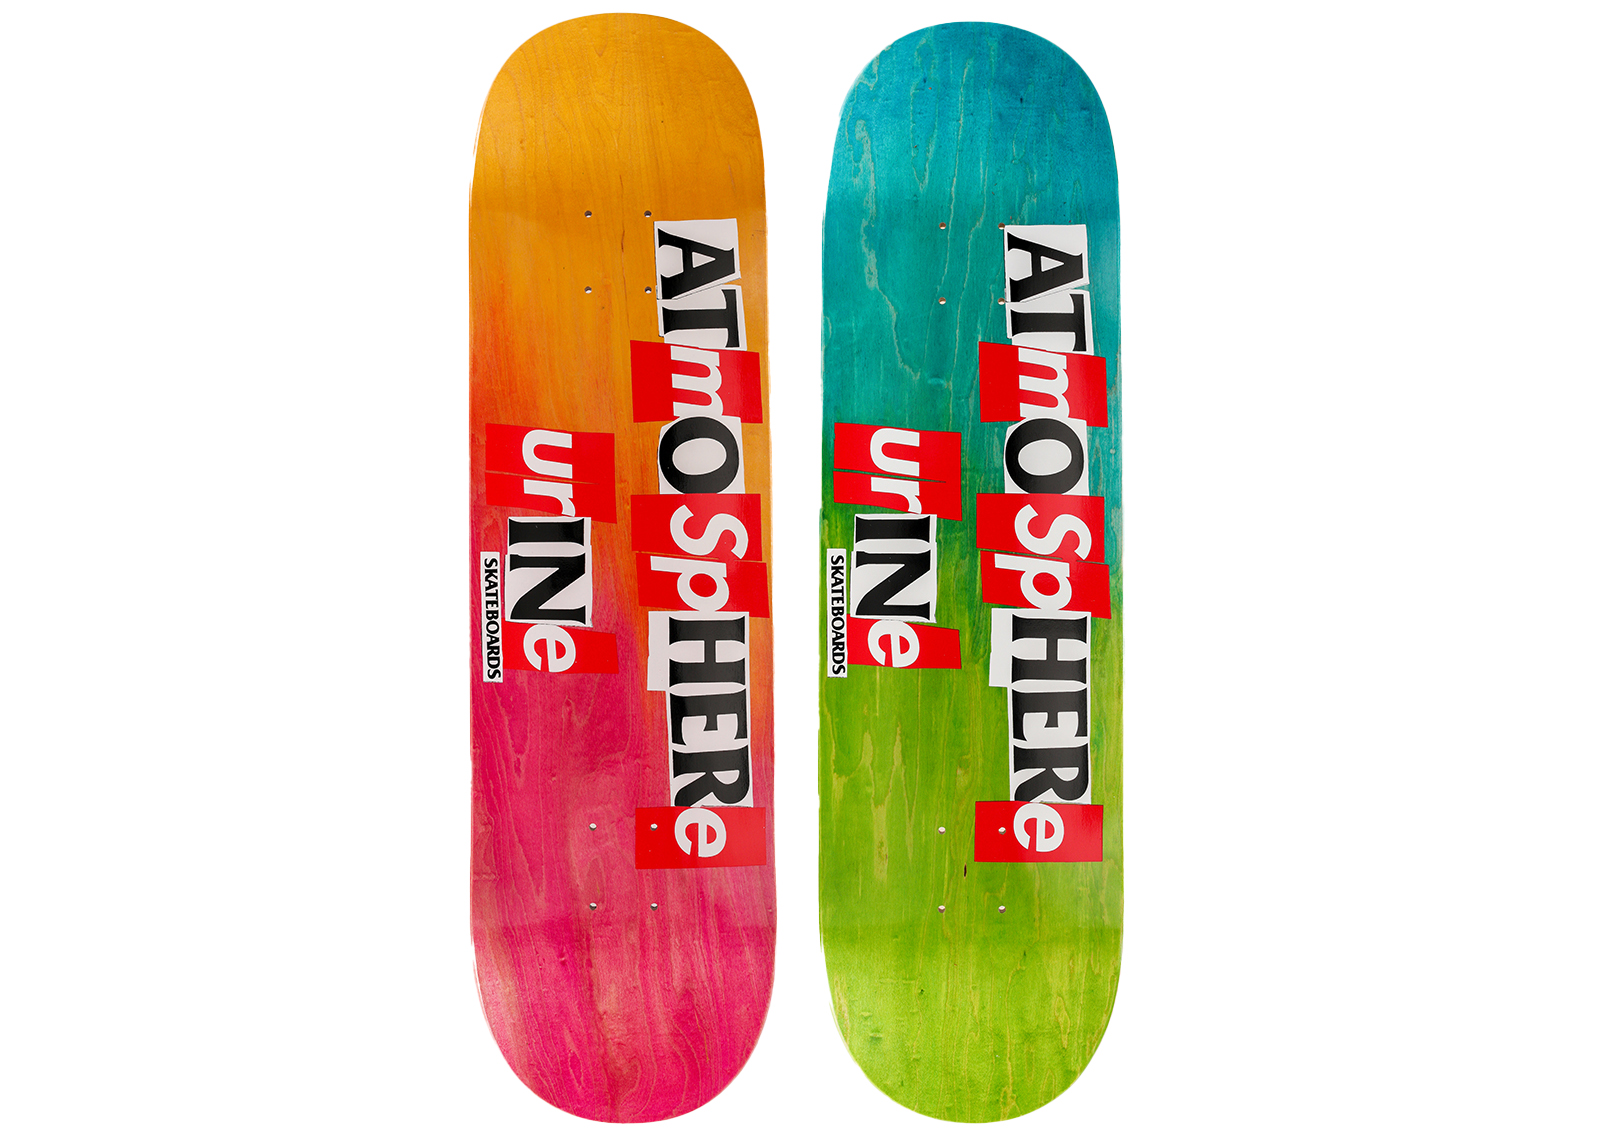 Supreme ANTIHERO Skateboard Deck Set - FW 20 - GB